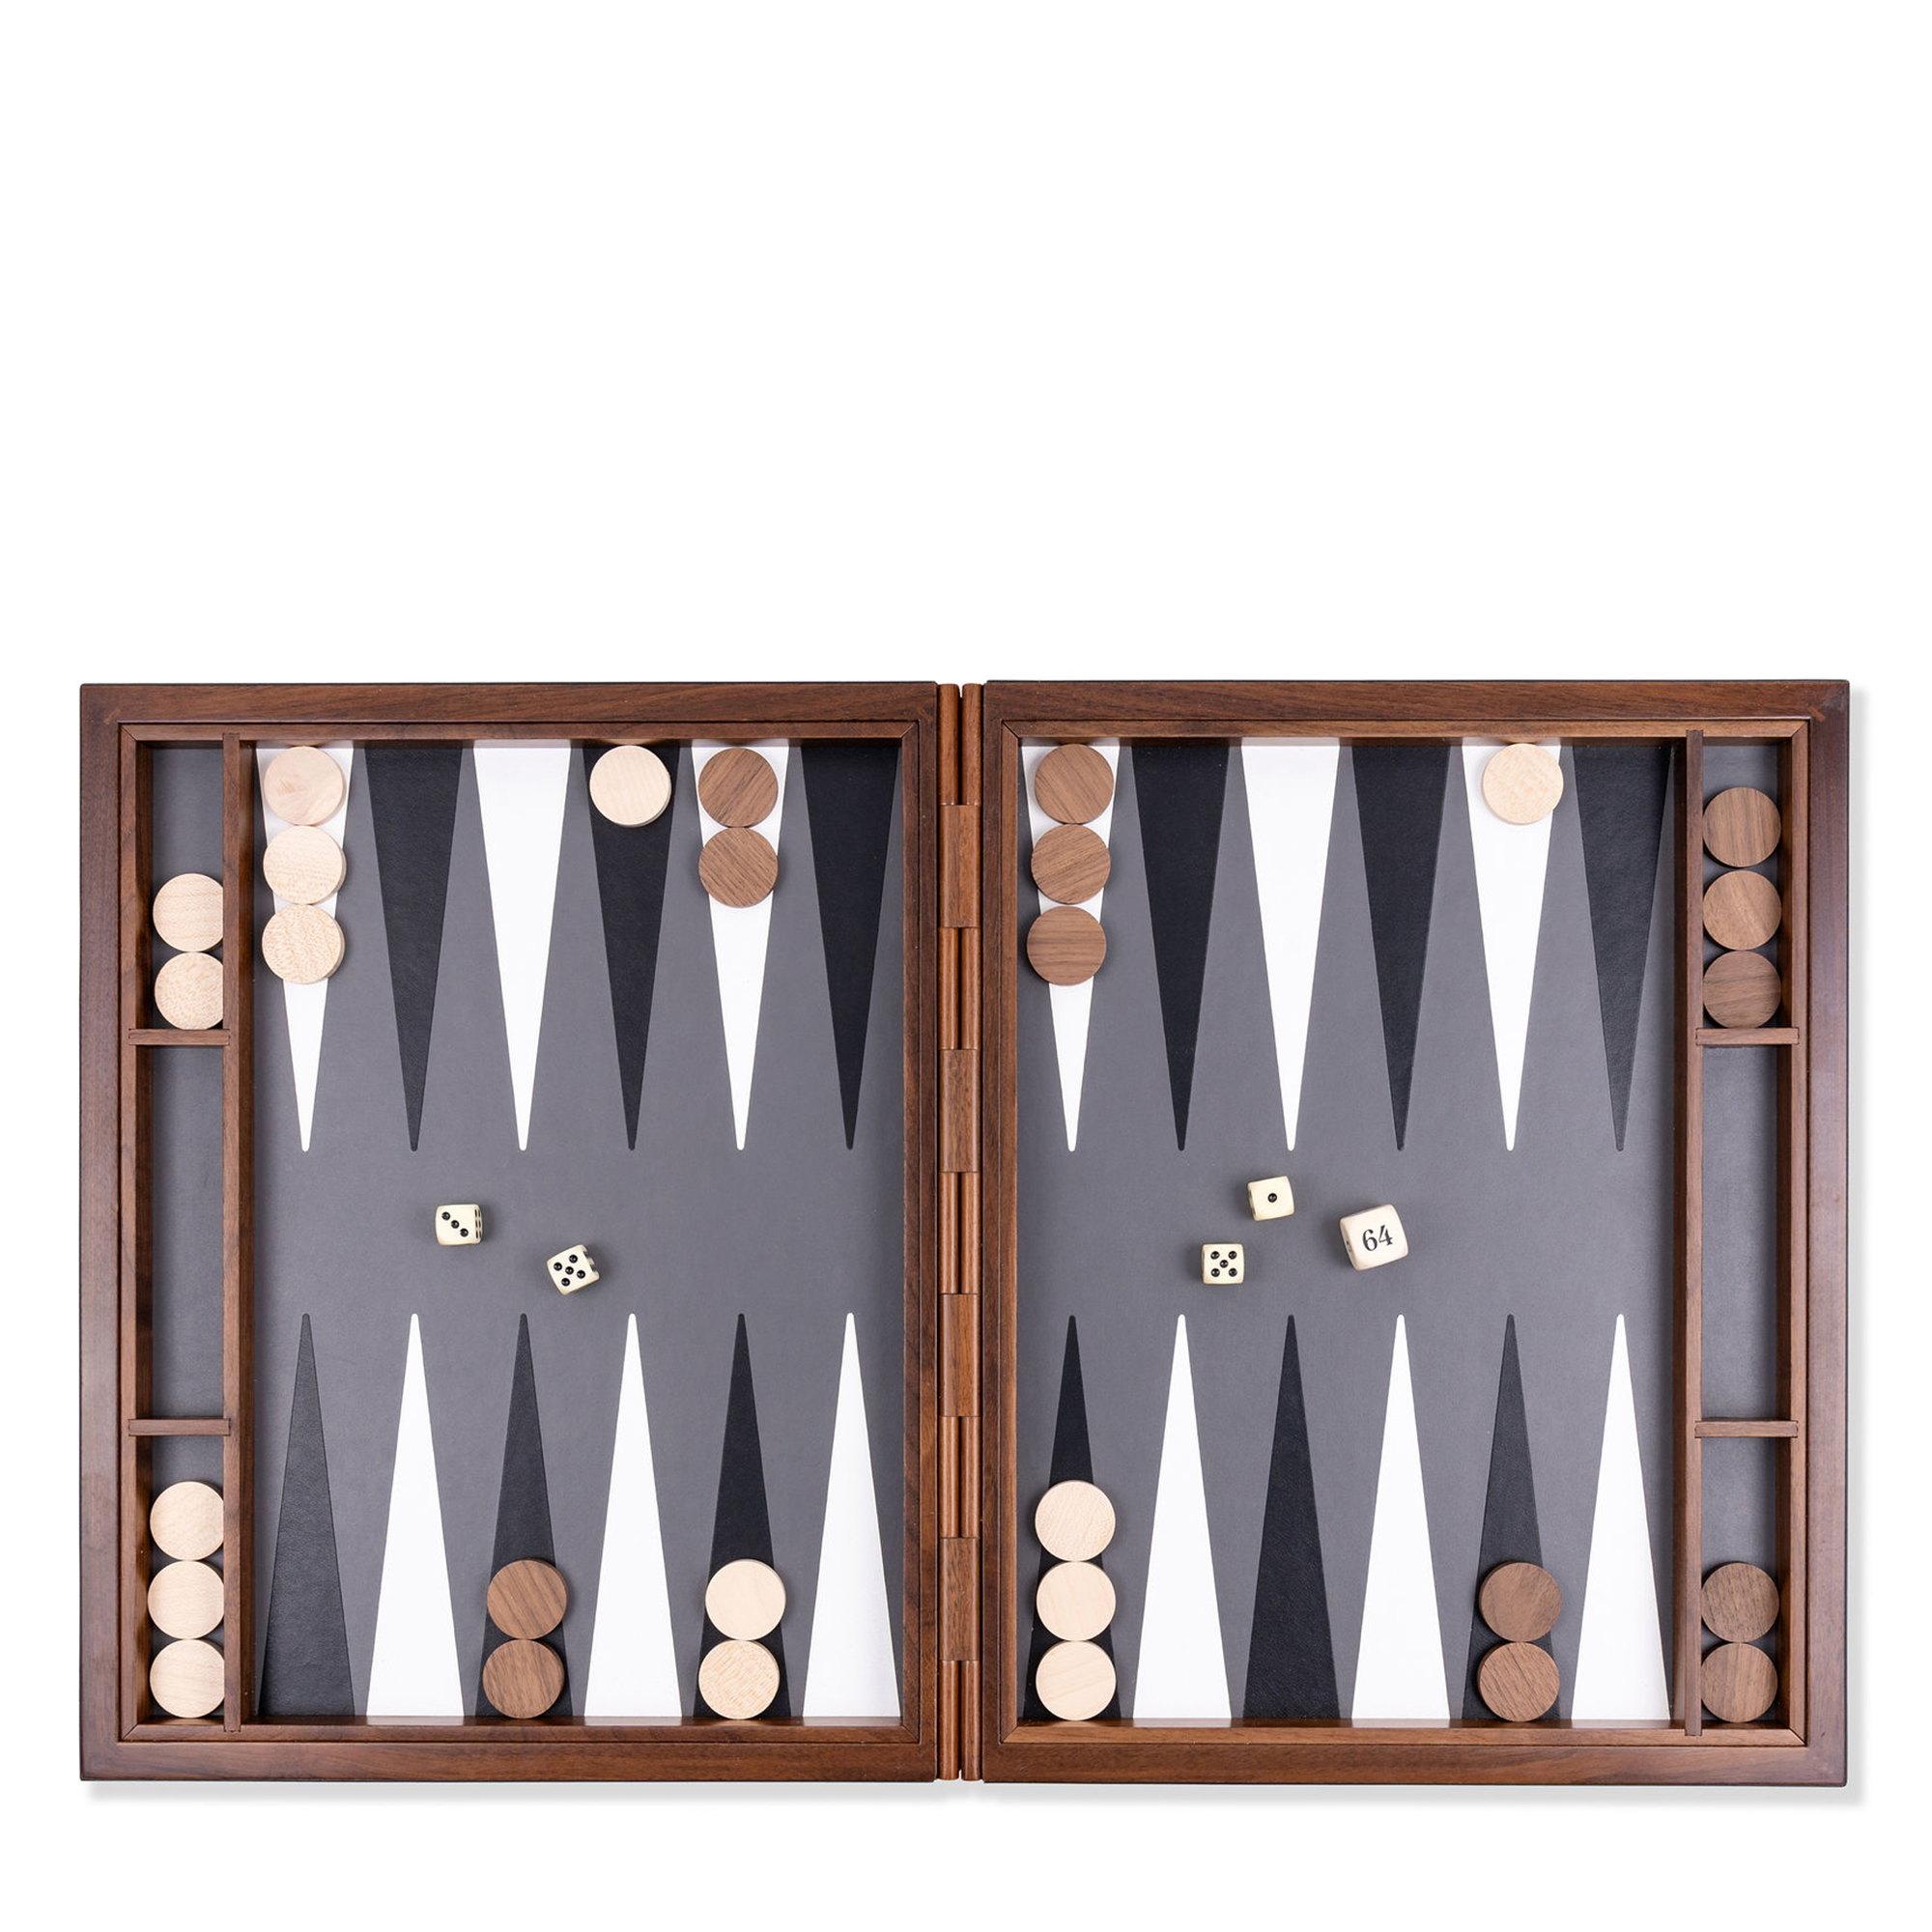 Safari Leather Backgammon Set - Black Nappa